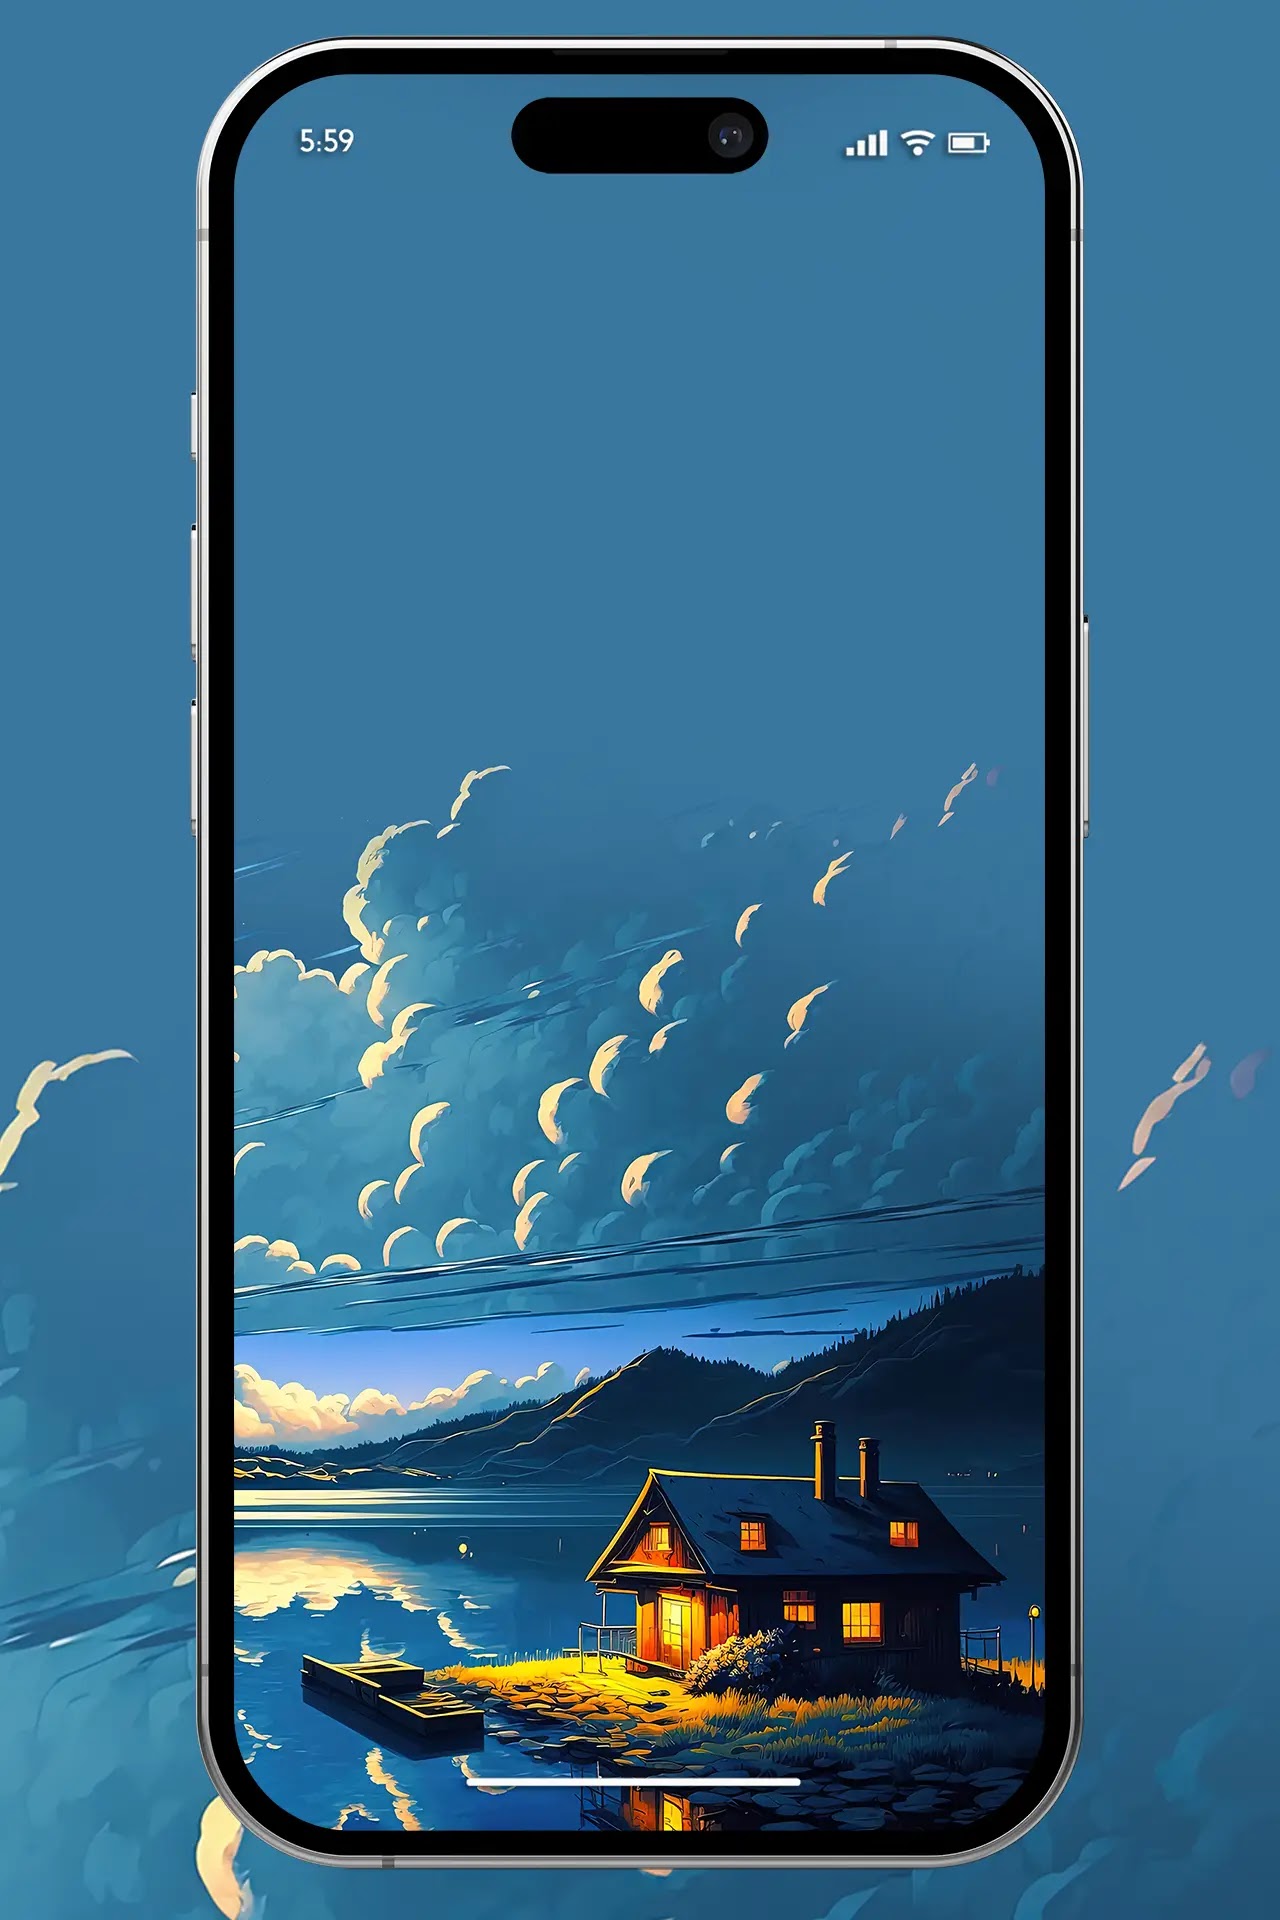 beautiful landscape lake illustration anime style wallpaper for phone